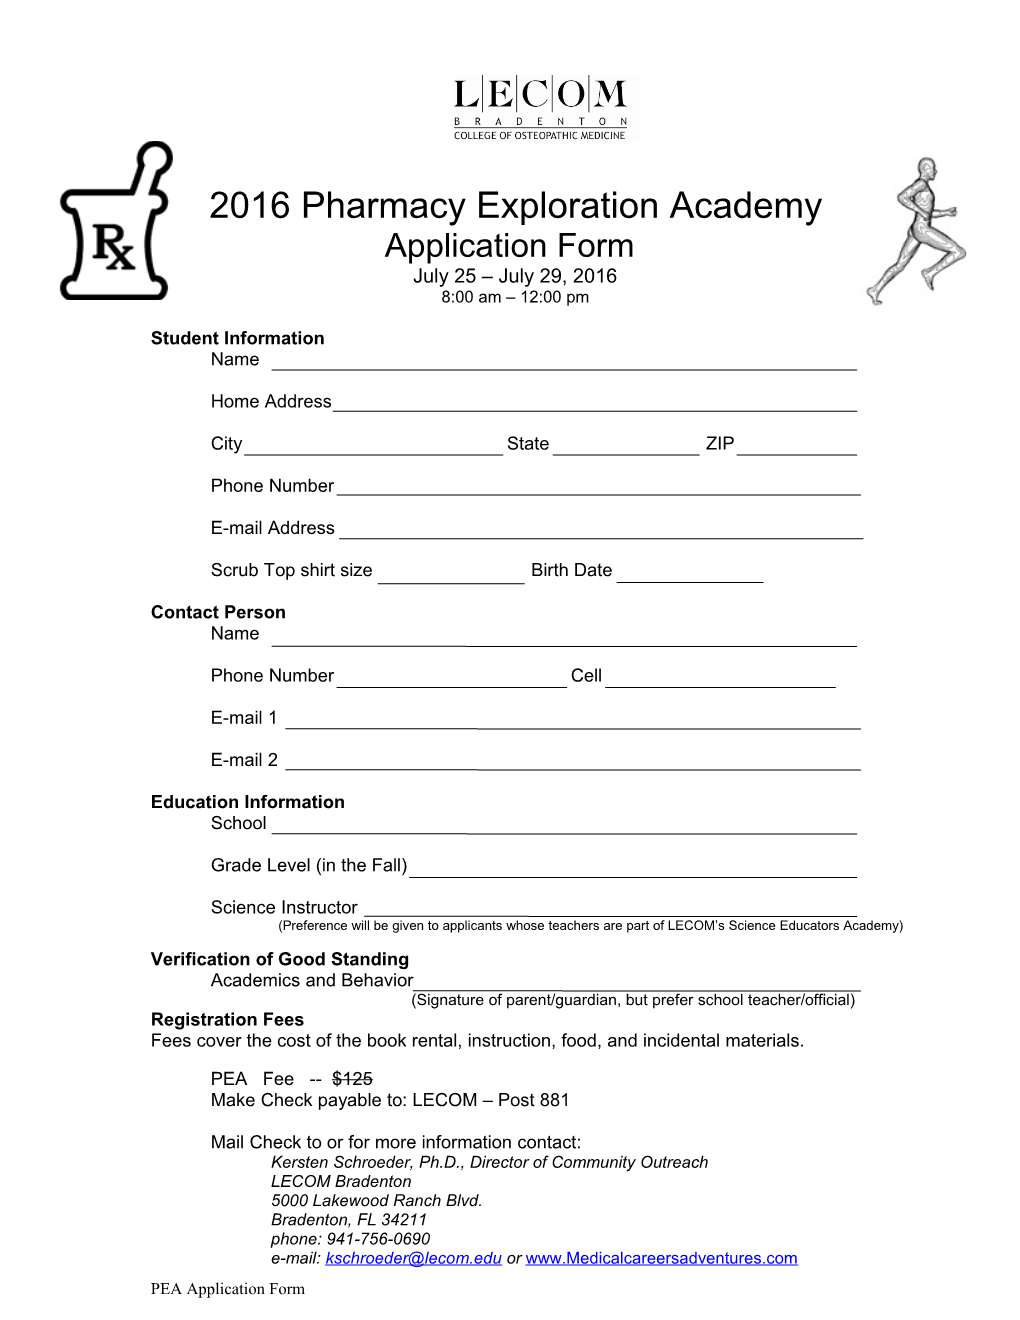 2016 Pharmacy Exploration Academy Application Form